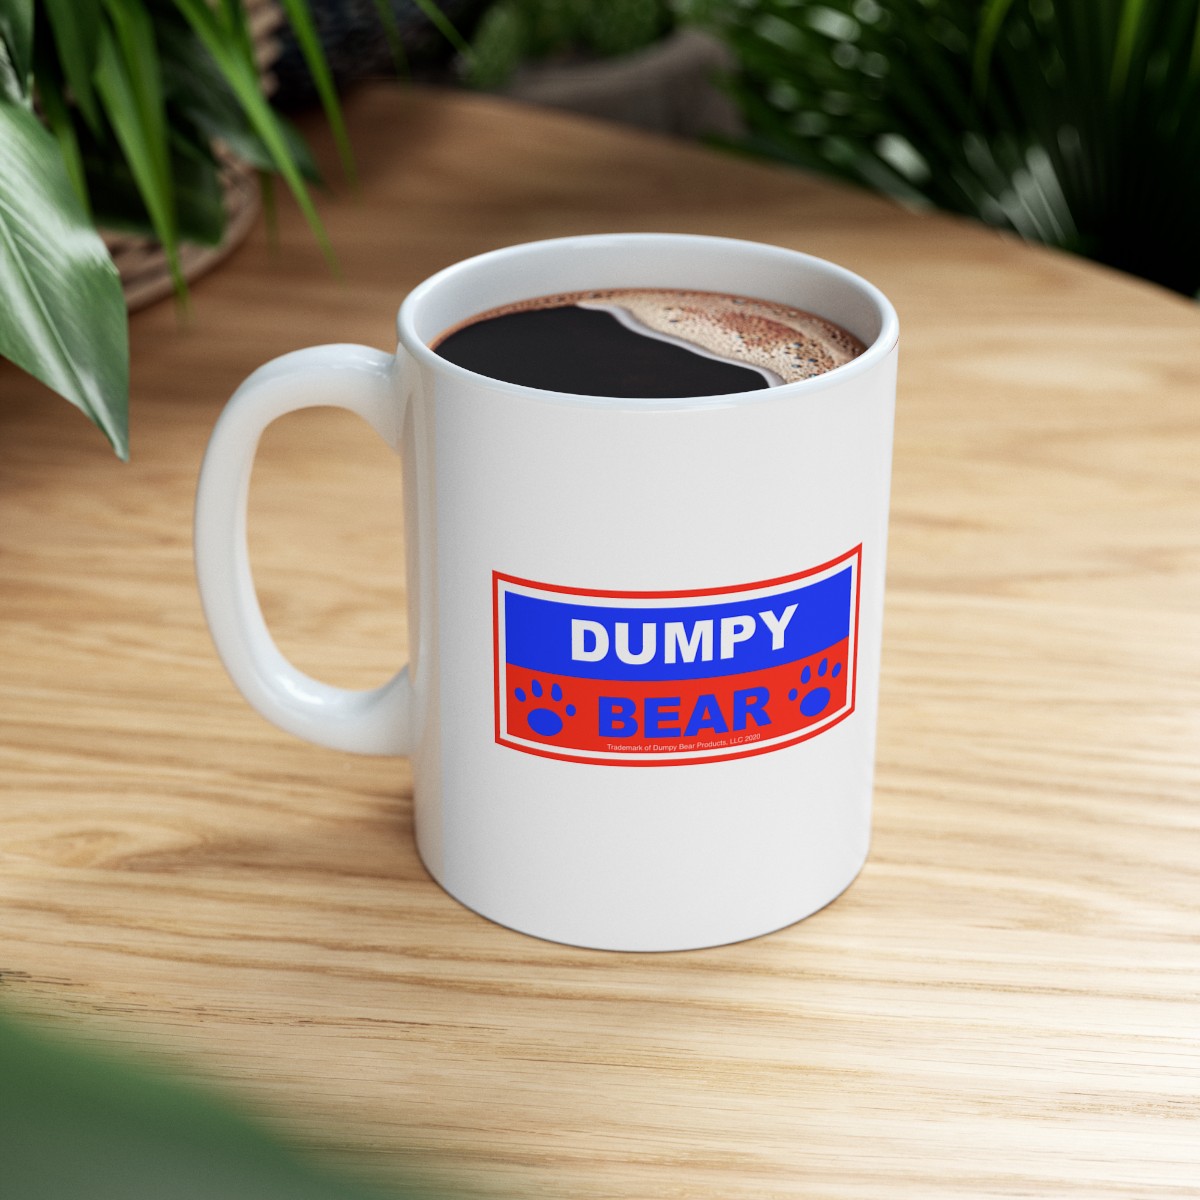 Dumpy Bear Goes to Russia - Ceramic Mug 11oz product thumbnail image